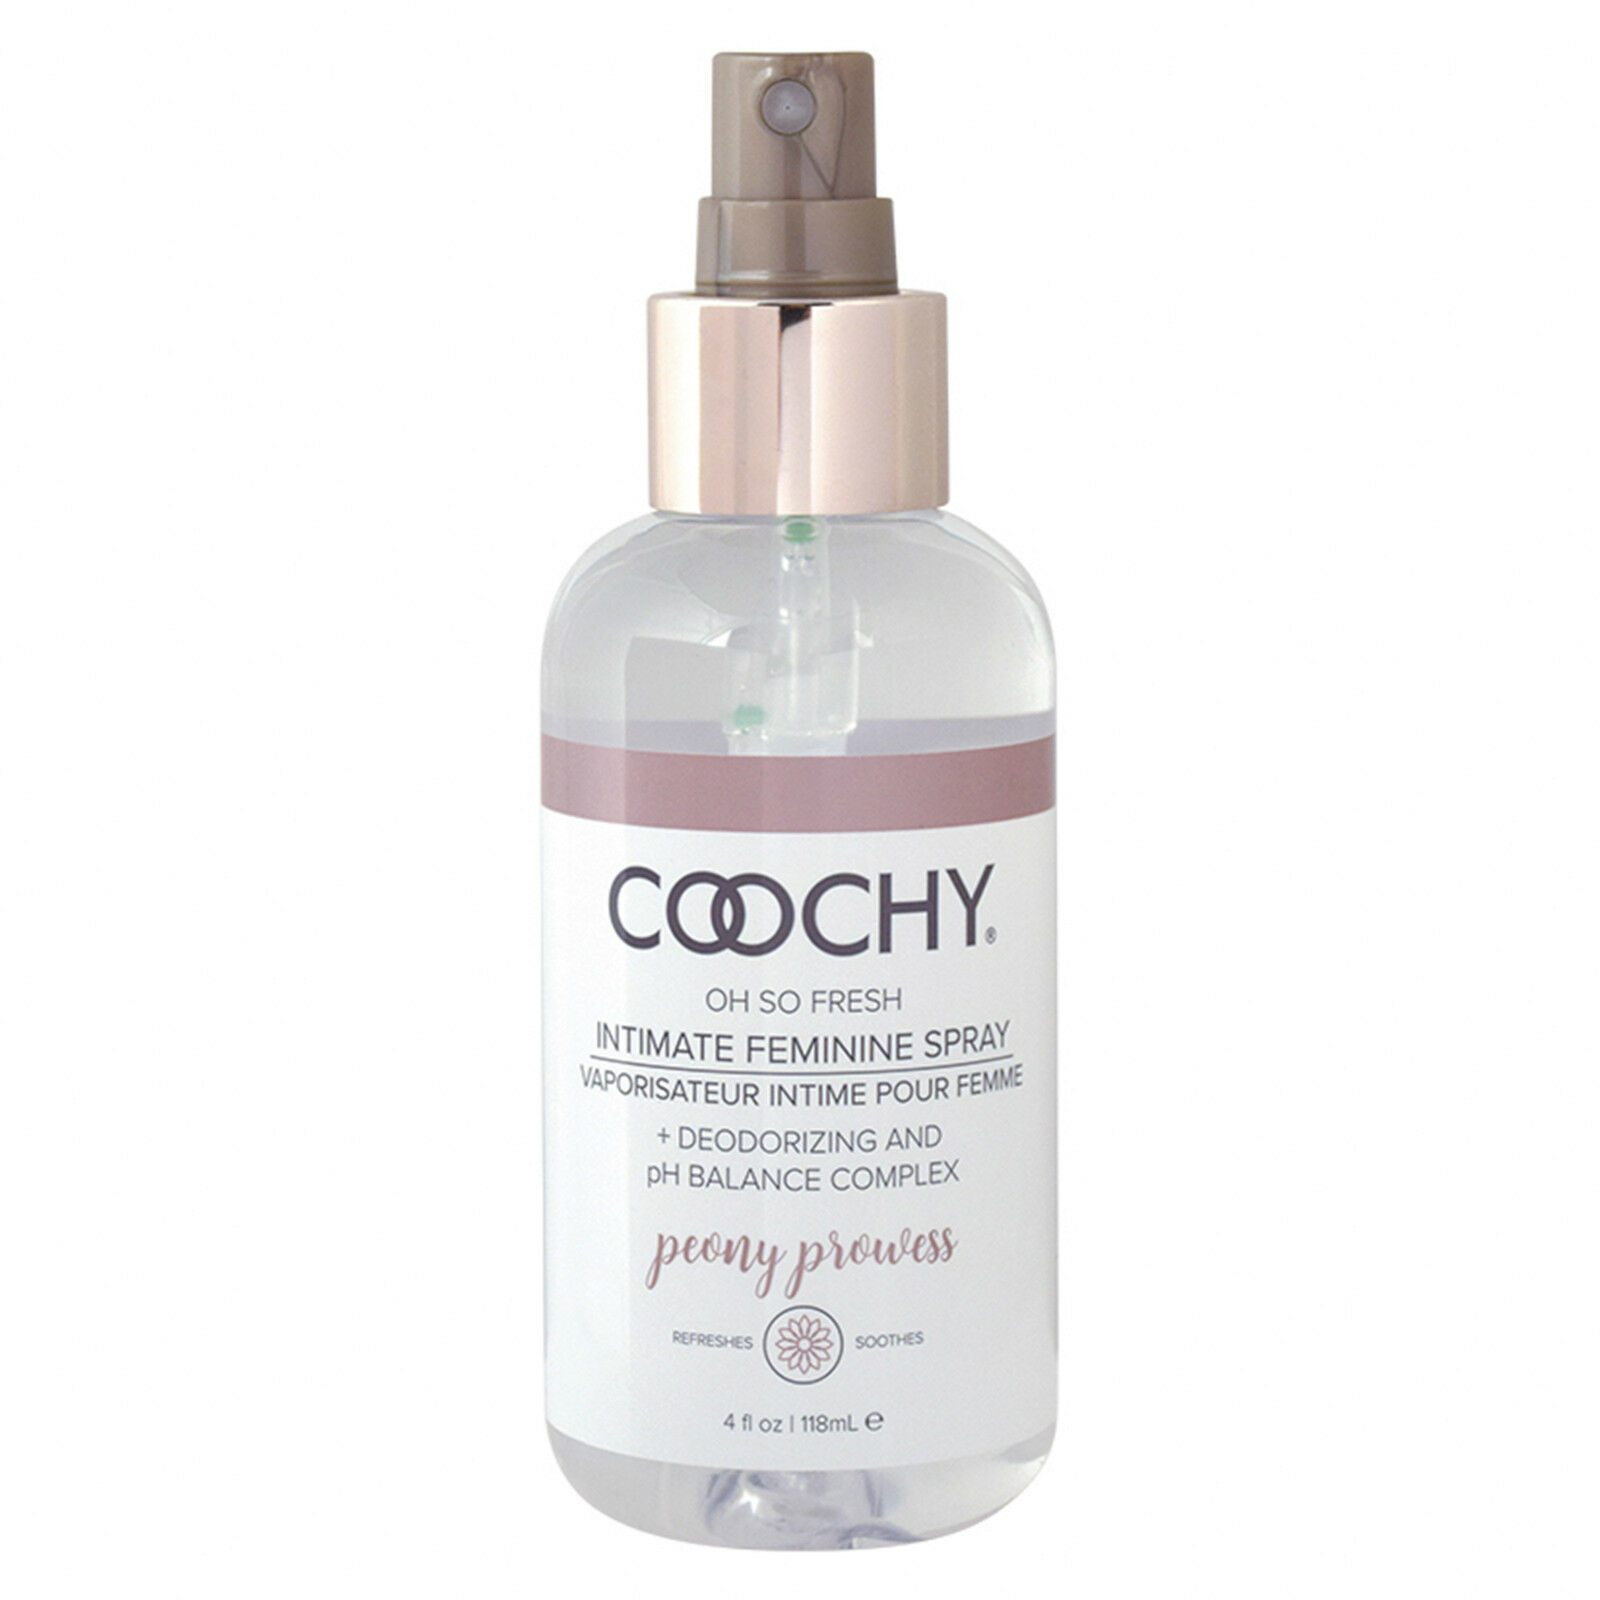 Coochy Intimate Feminine Spray For Women 4oz - Deodorize And Promote Ph Balance